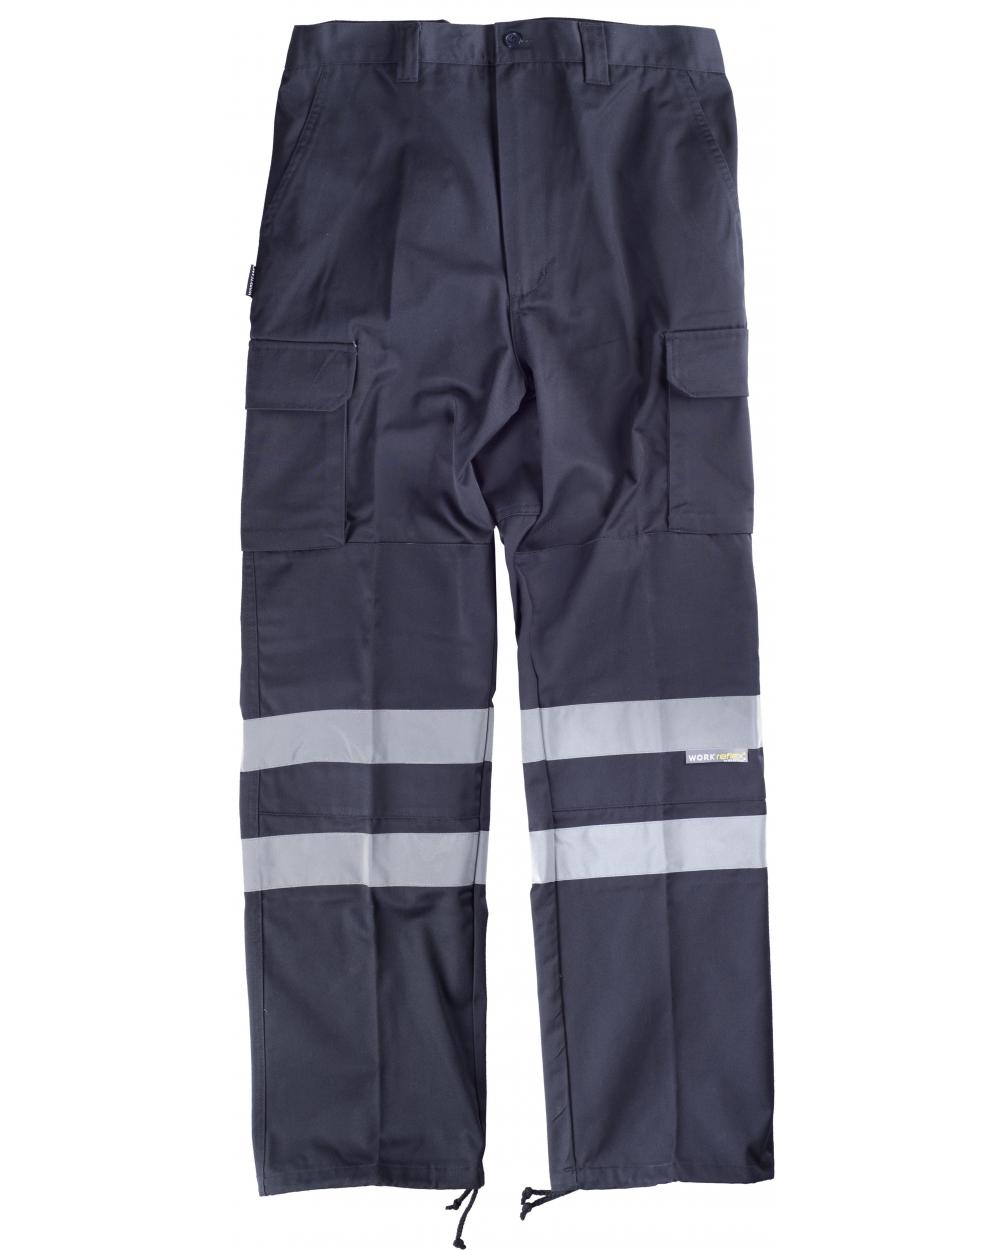 Comprar Pantalon con refuerzos (tallas grandes) C4016 Marino workteam delante